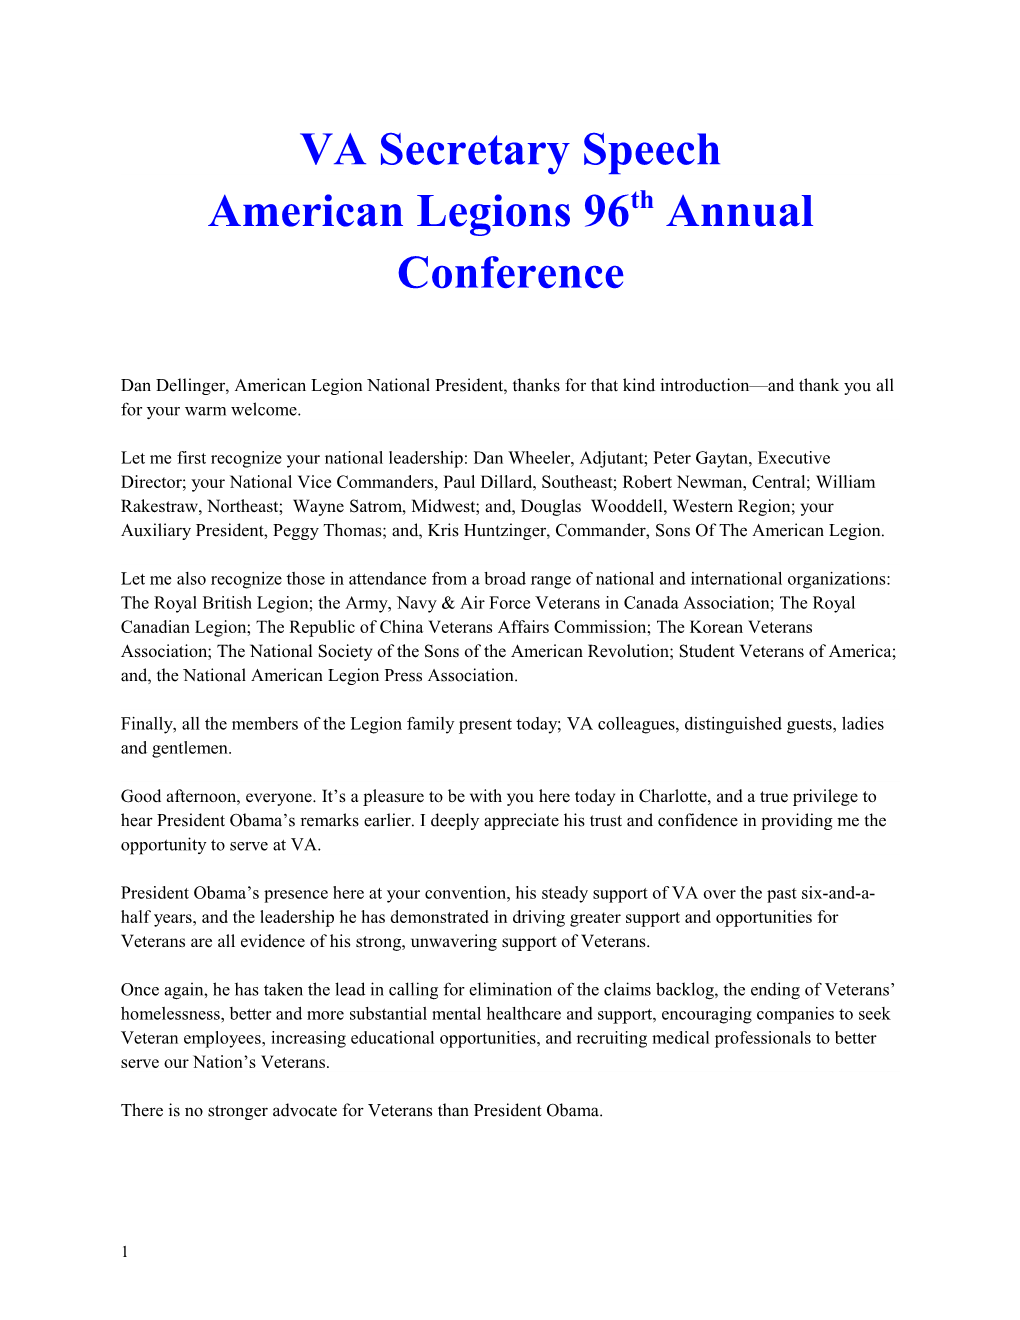 American Legions 96Th Annual Conference